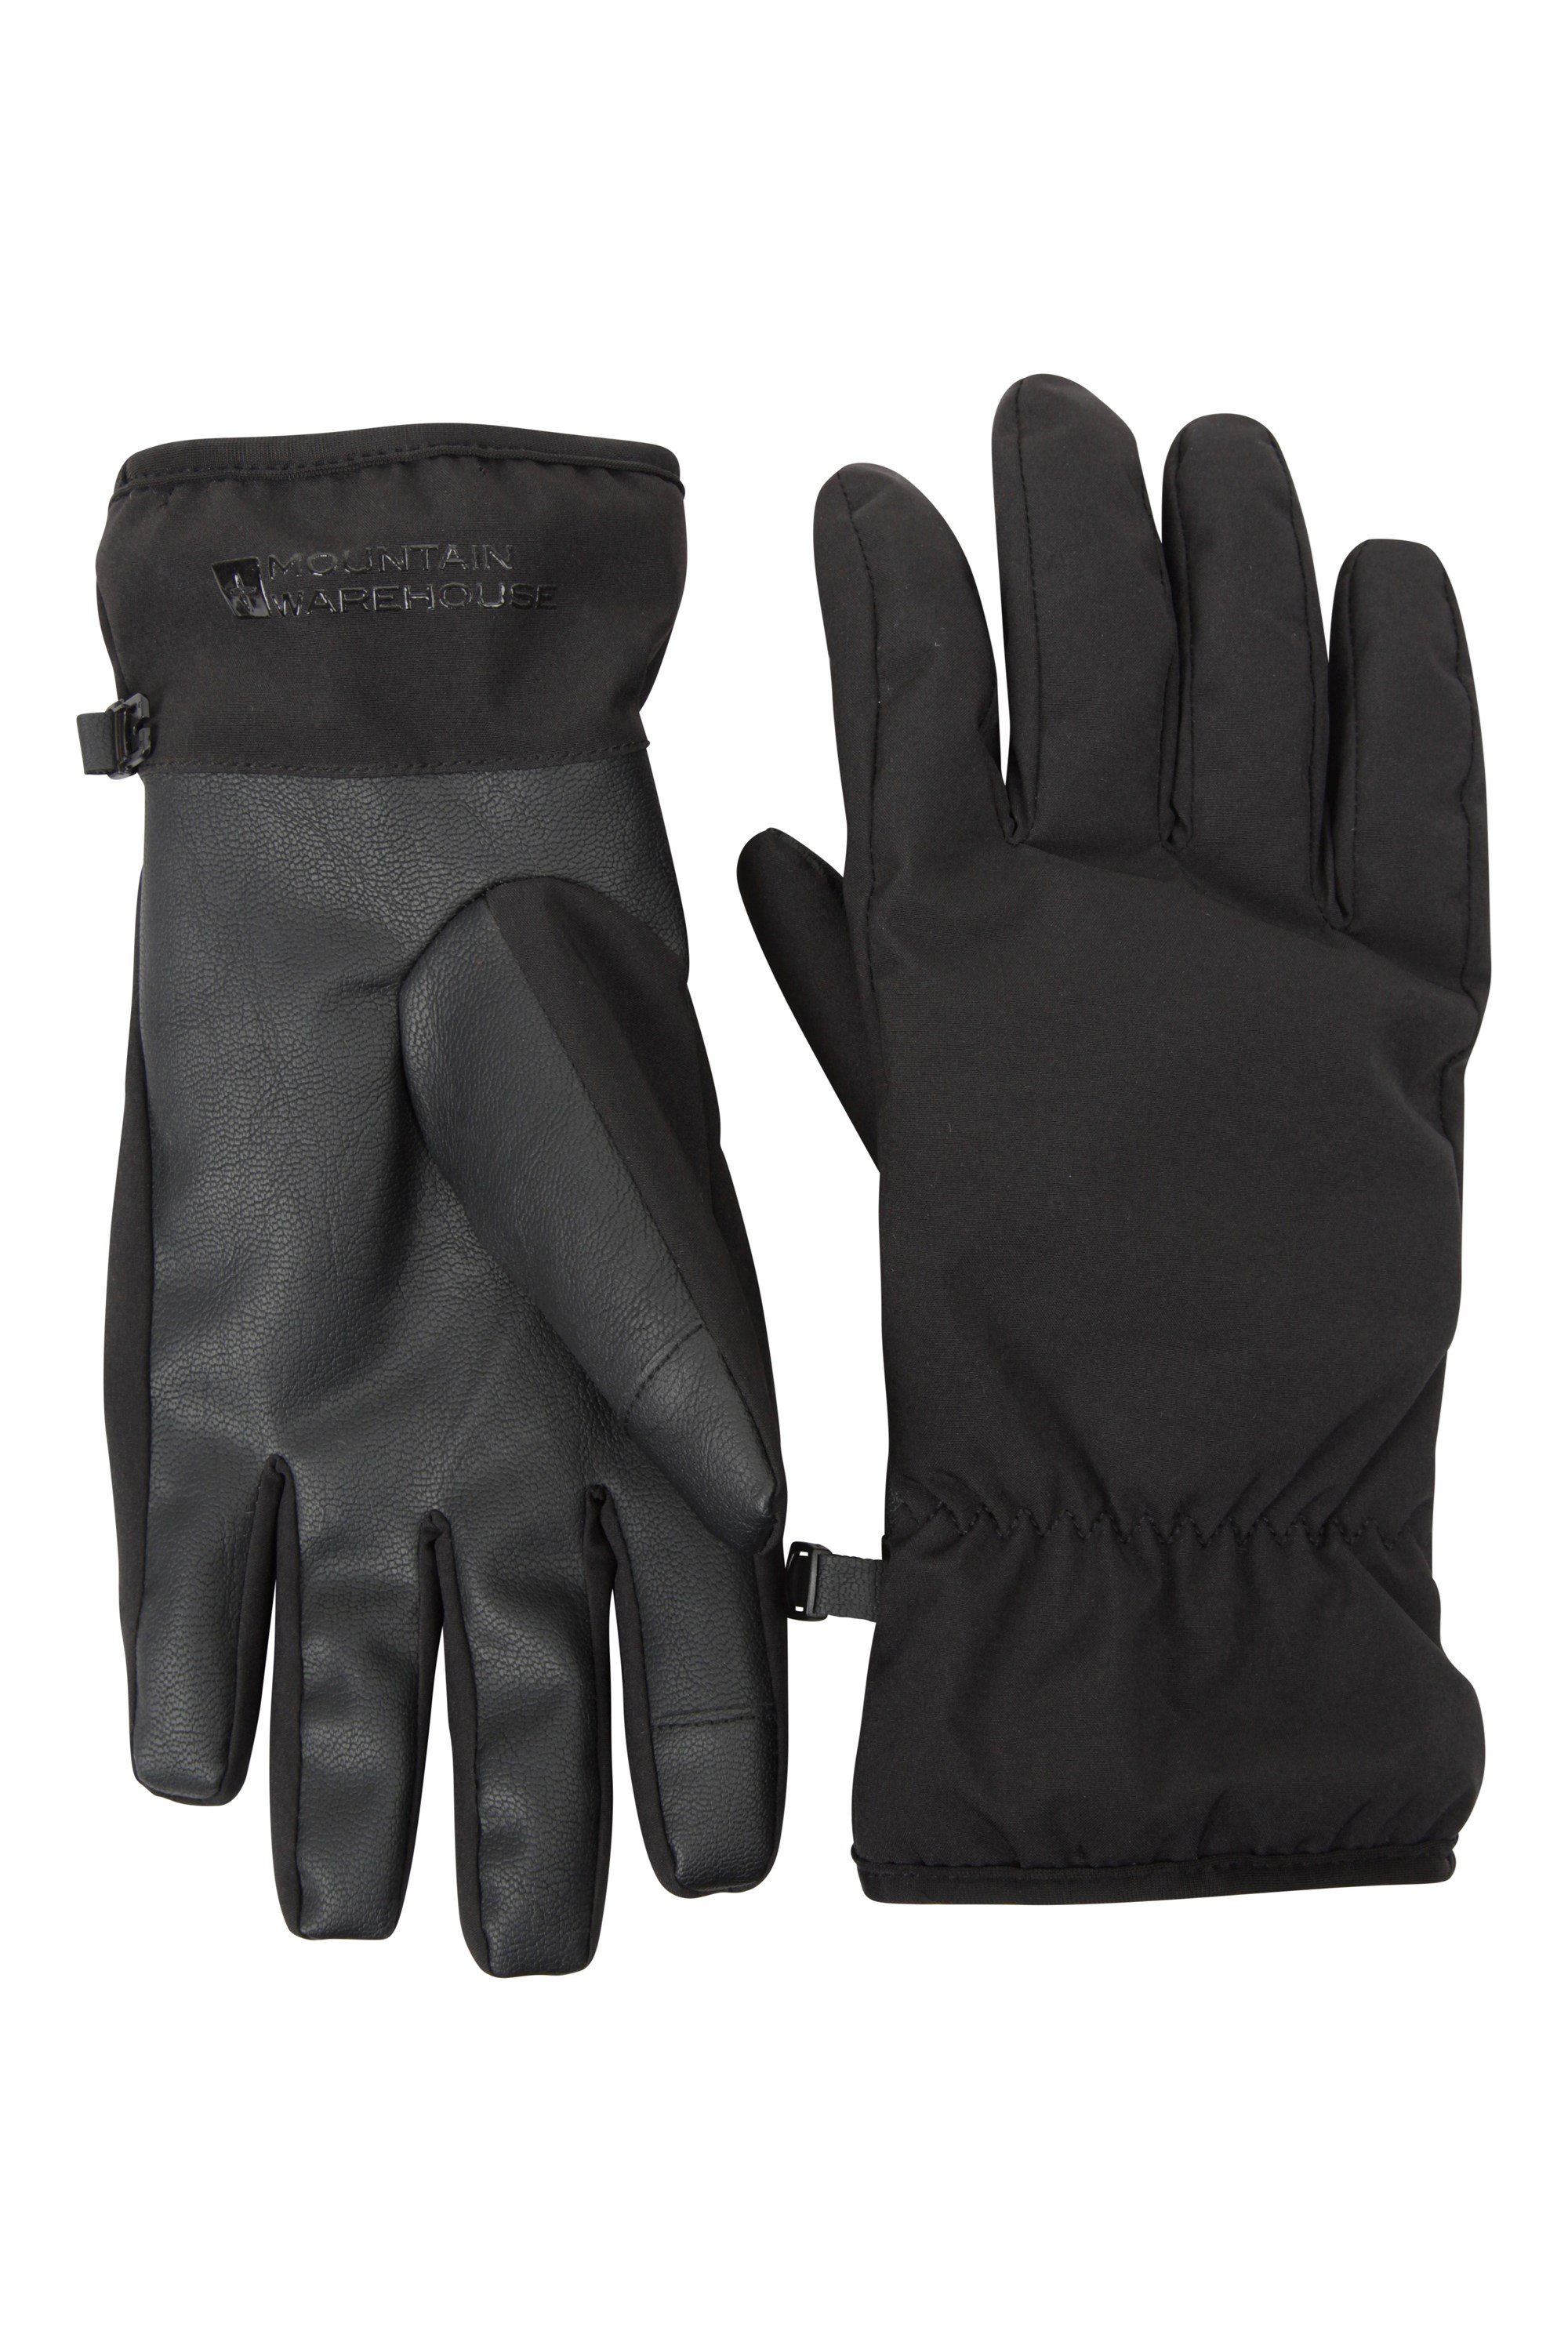 Hurricane Extreme Mens Windproof Gloves - Black